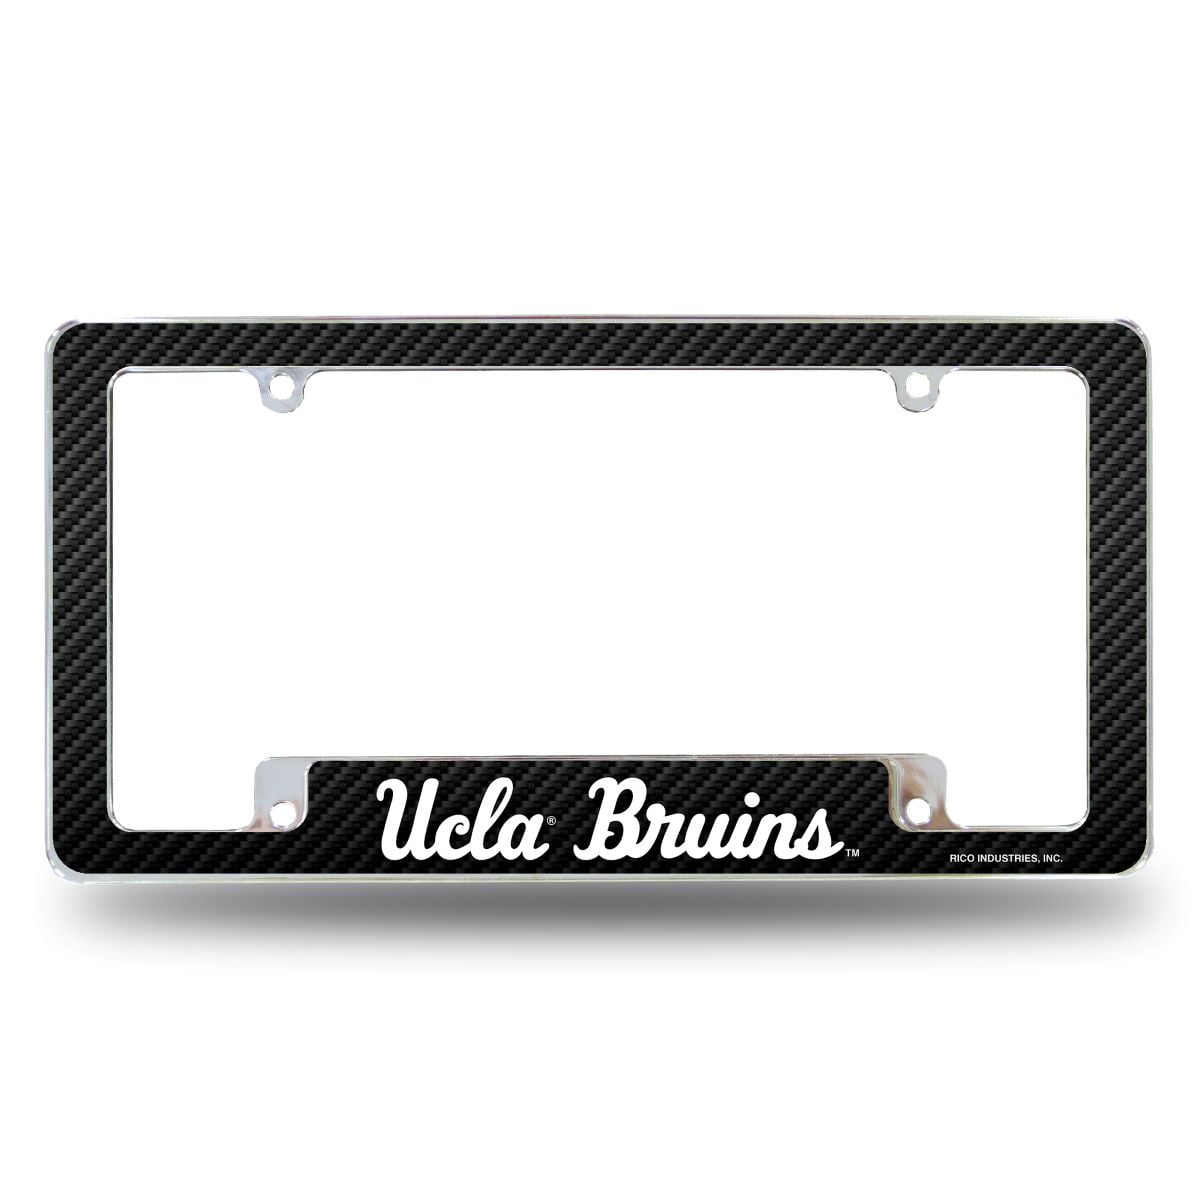 UCLA NCAA Bruins Chrome Metal License Plate Frame with Carbon Fiber Design